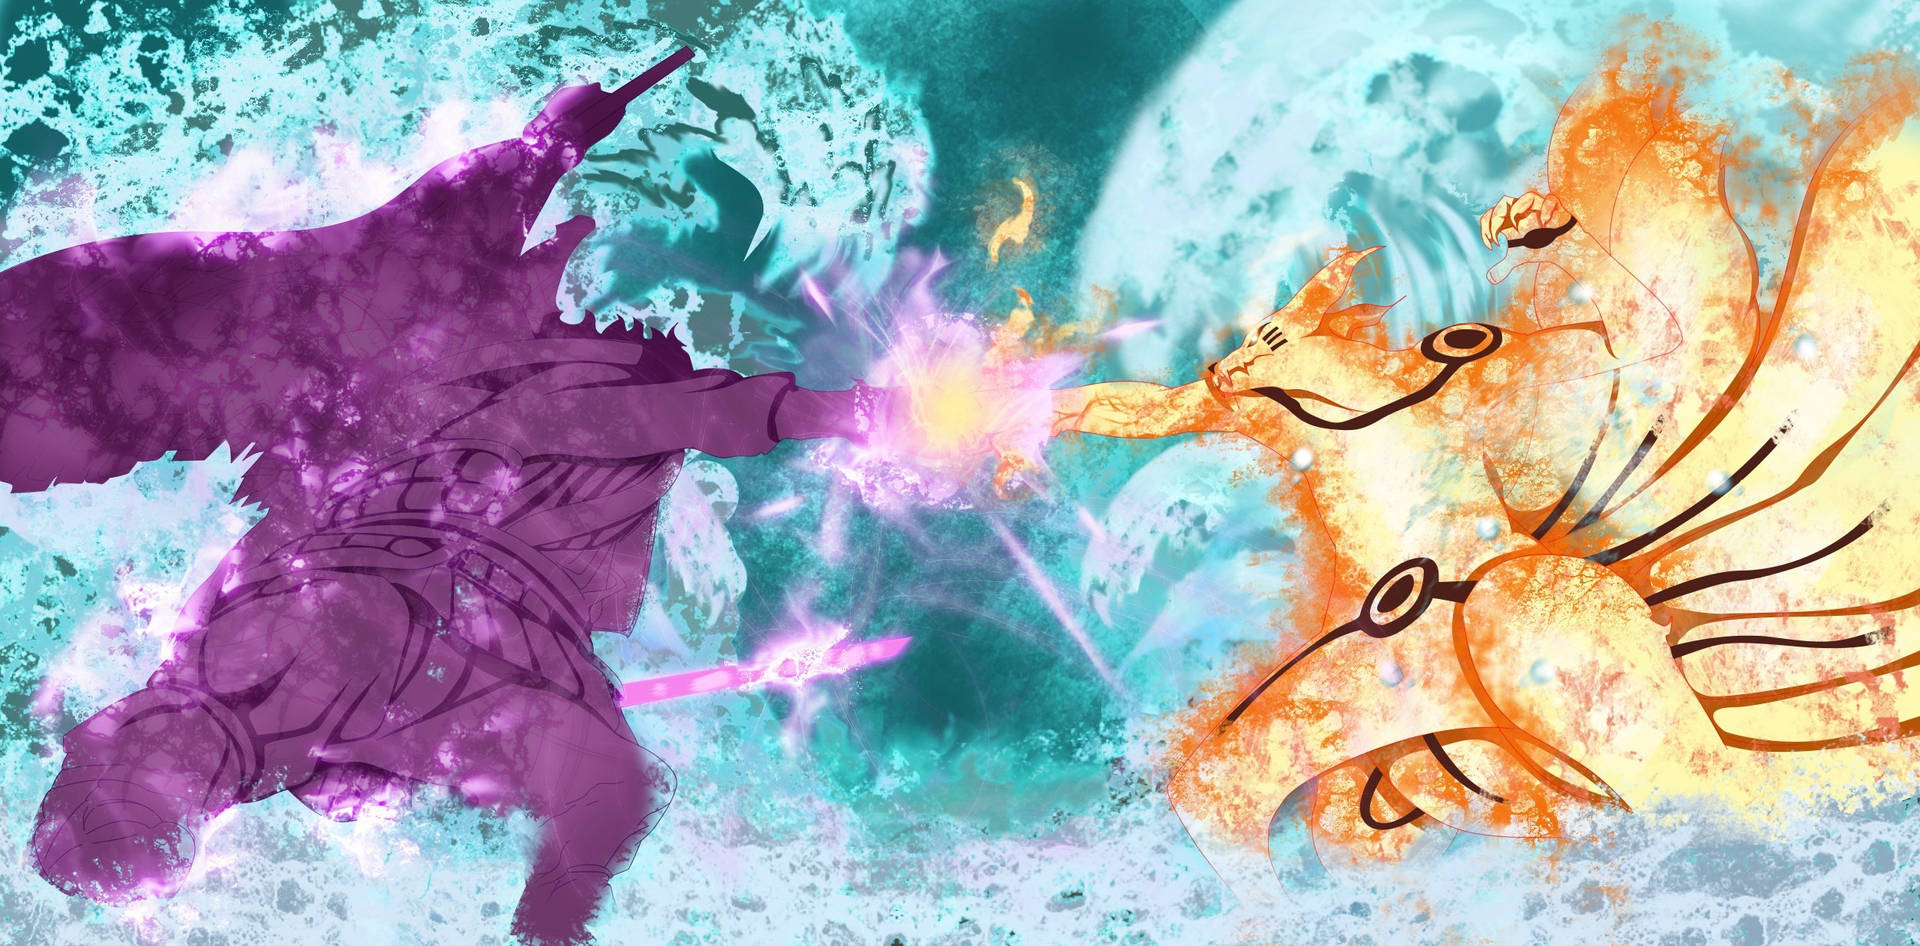 Sasuke Vs Naruto Pictures Wallpaper